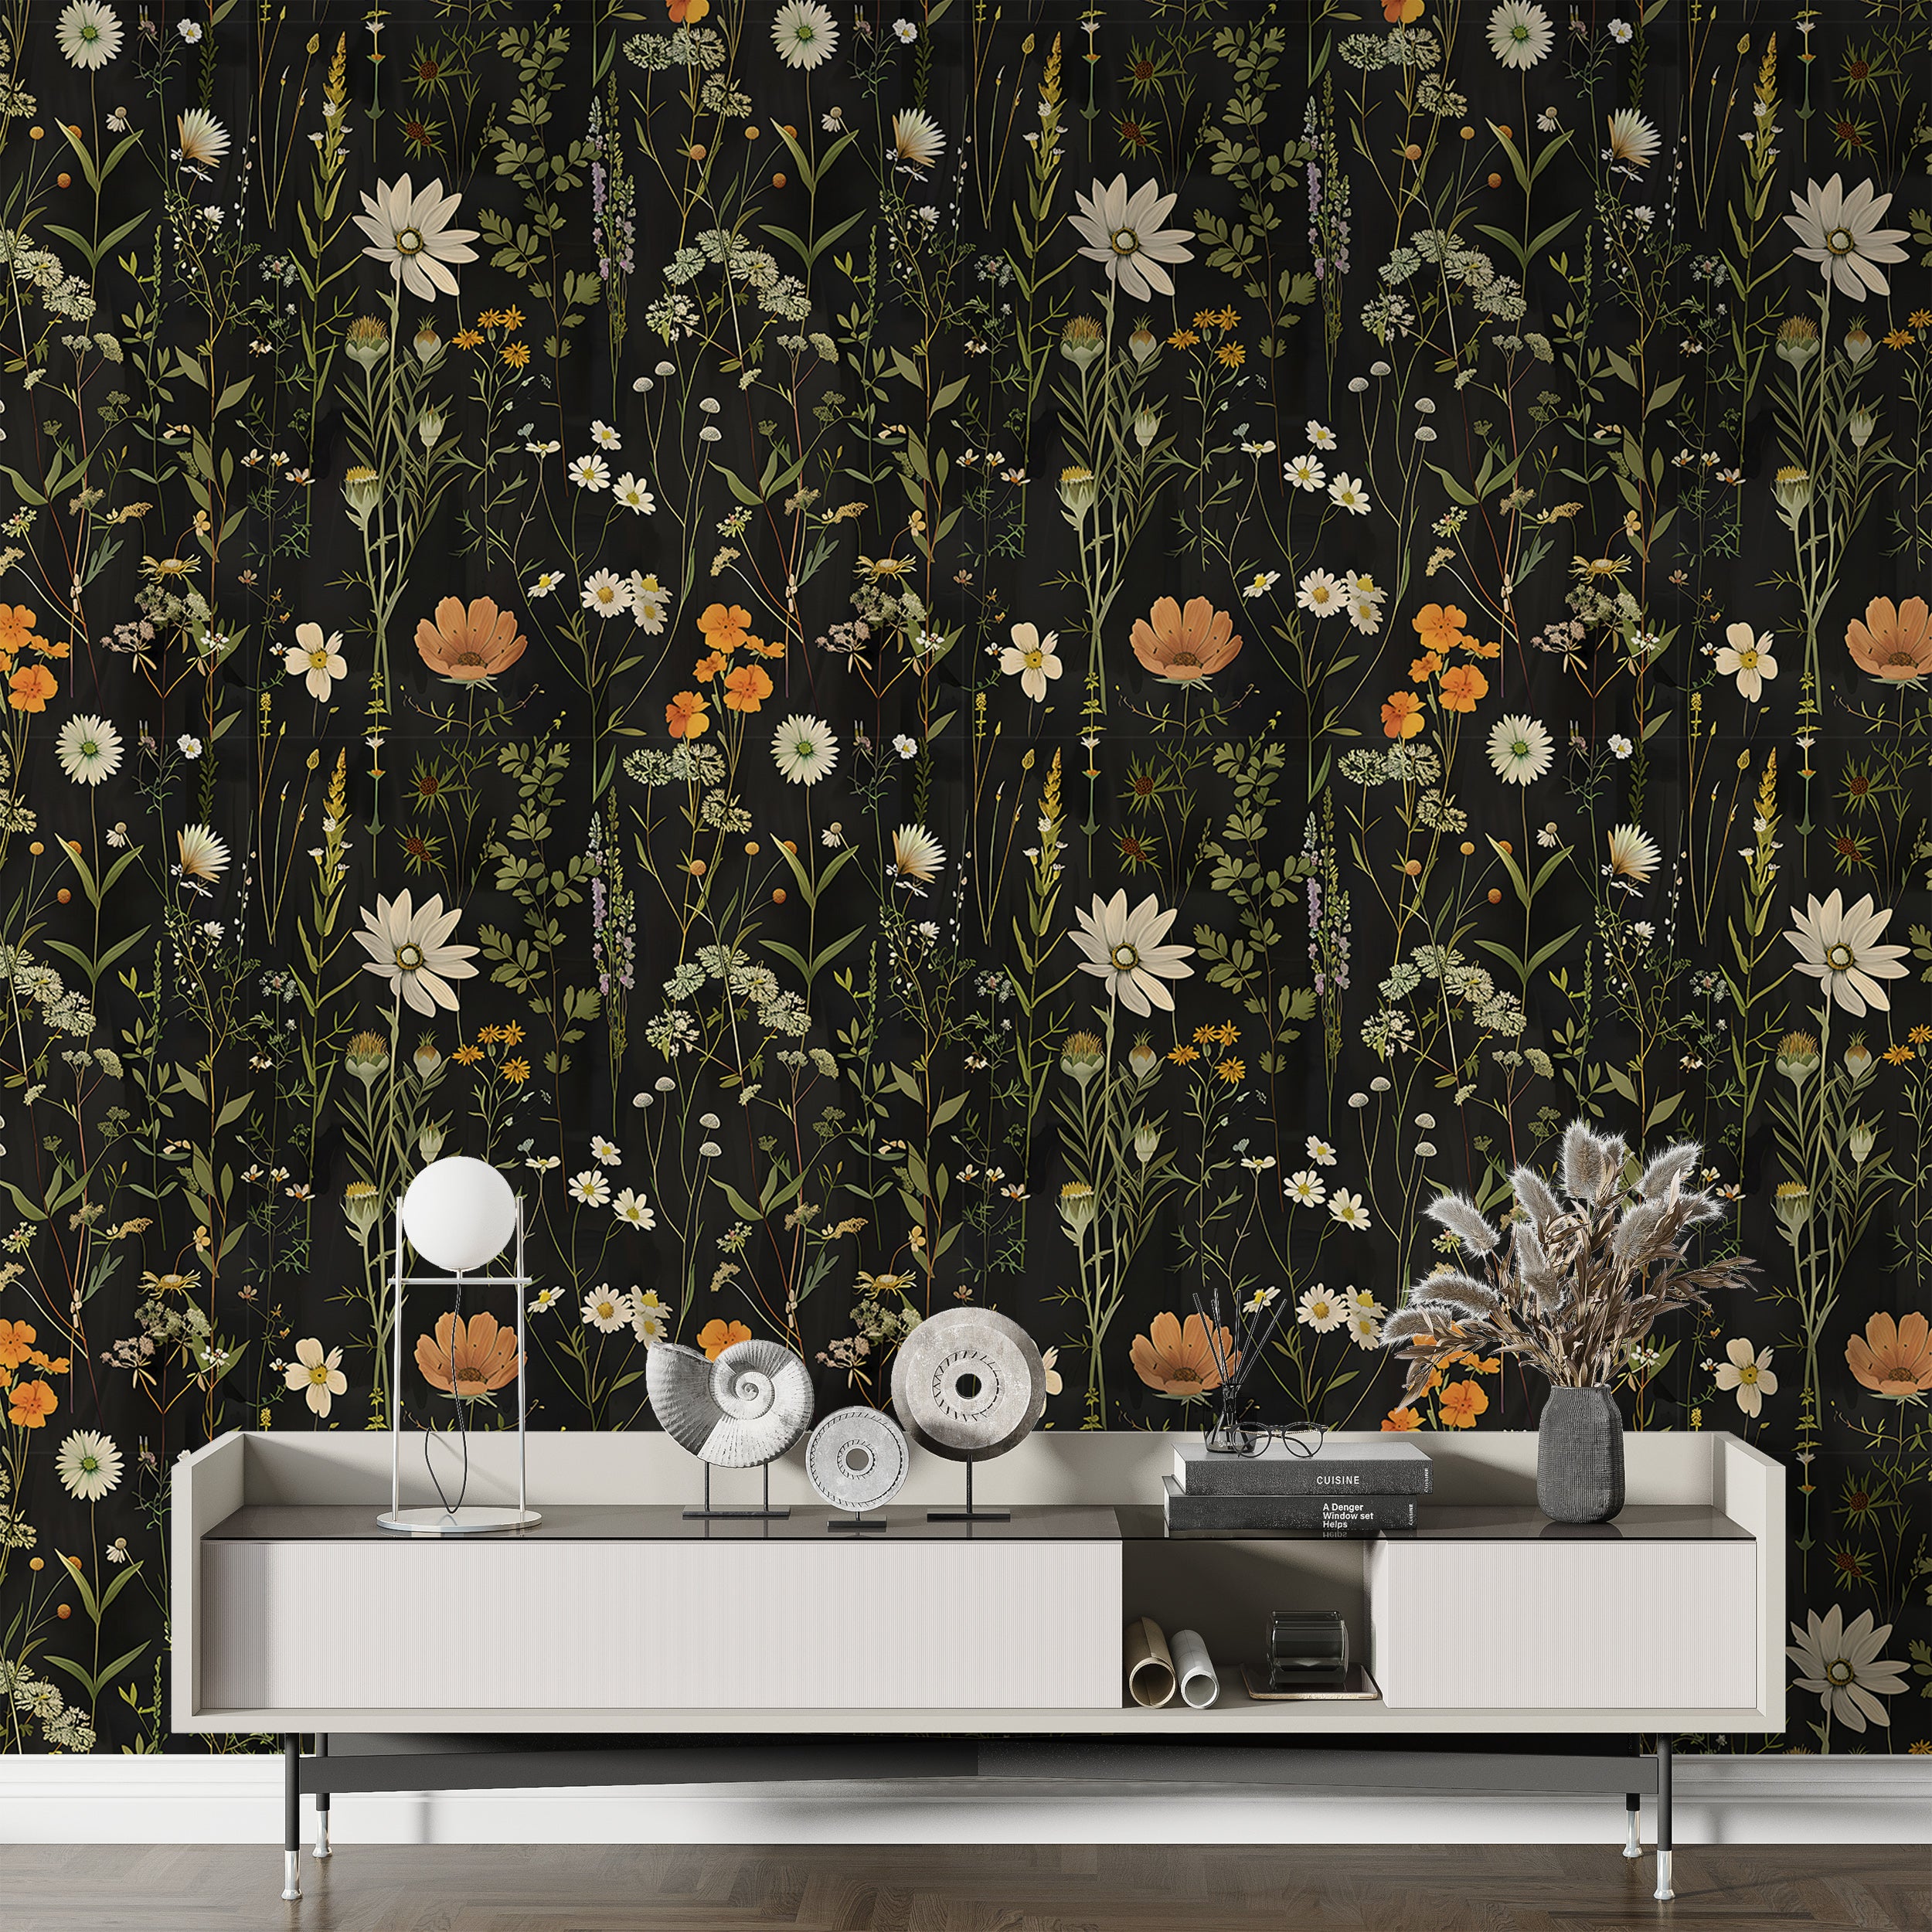 Meadow Flowers Wallpaper, Dark Botanical Decal, Peel and Stick Dark Floral, Vintage Flower Wallpaper, Removable Wild Flowers Black Background